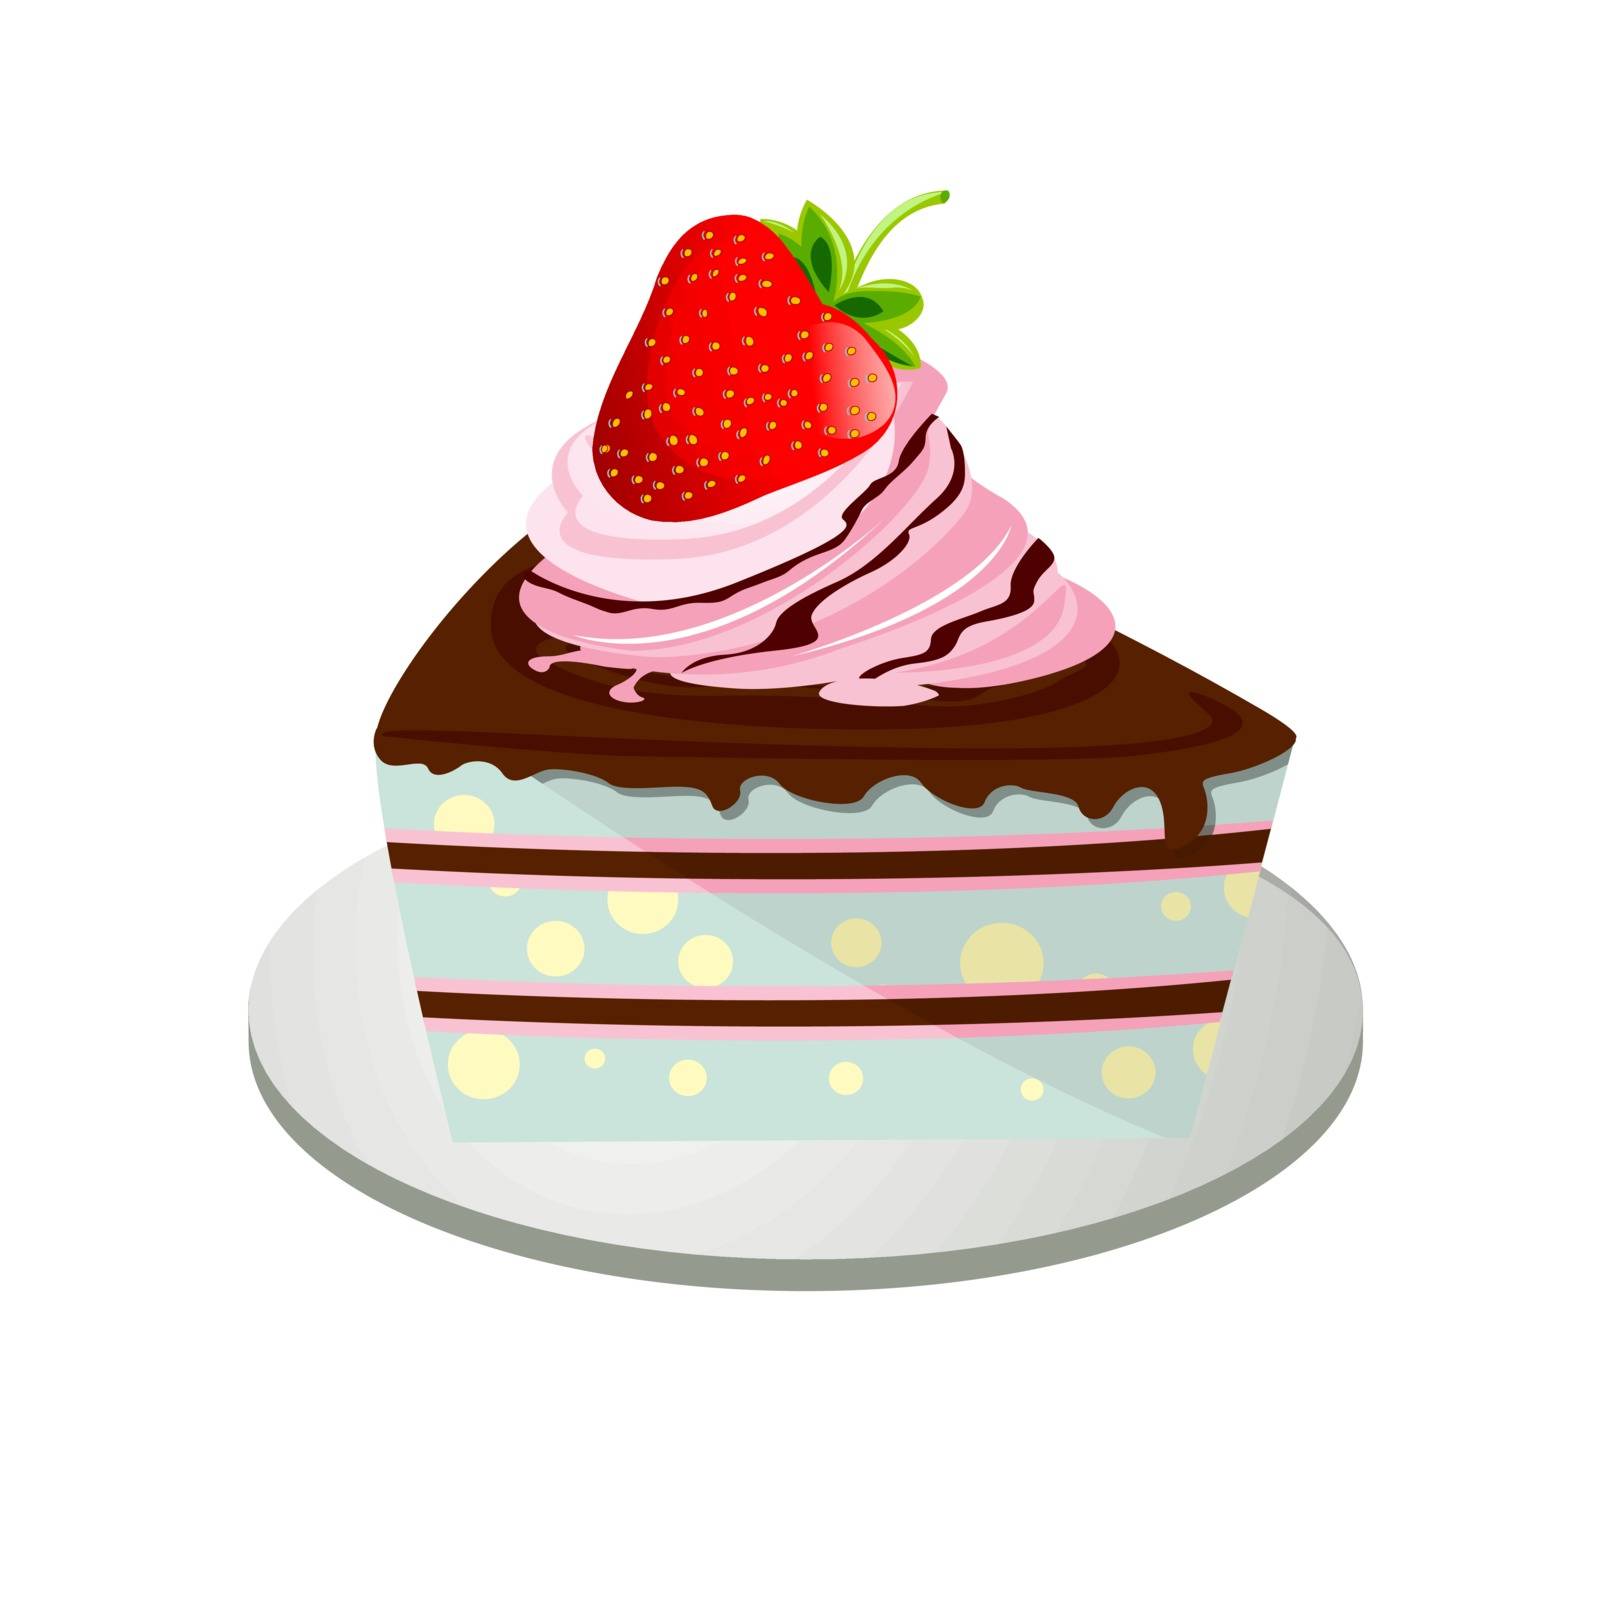 Strawberry and chocolate cake by Lirch